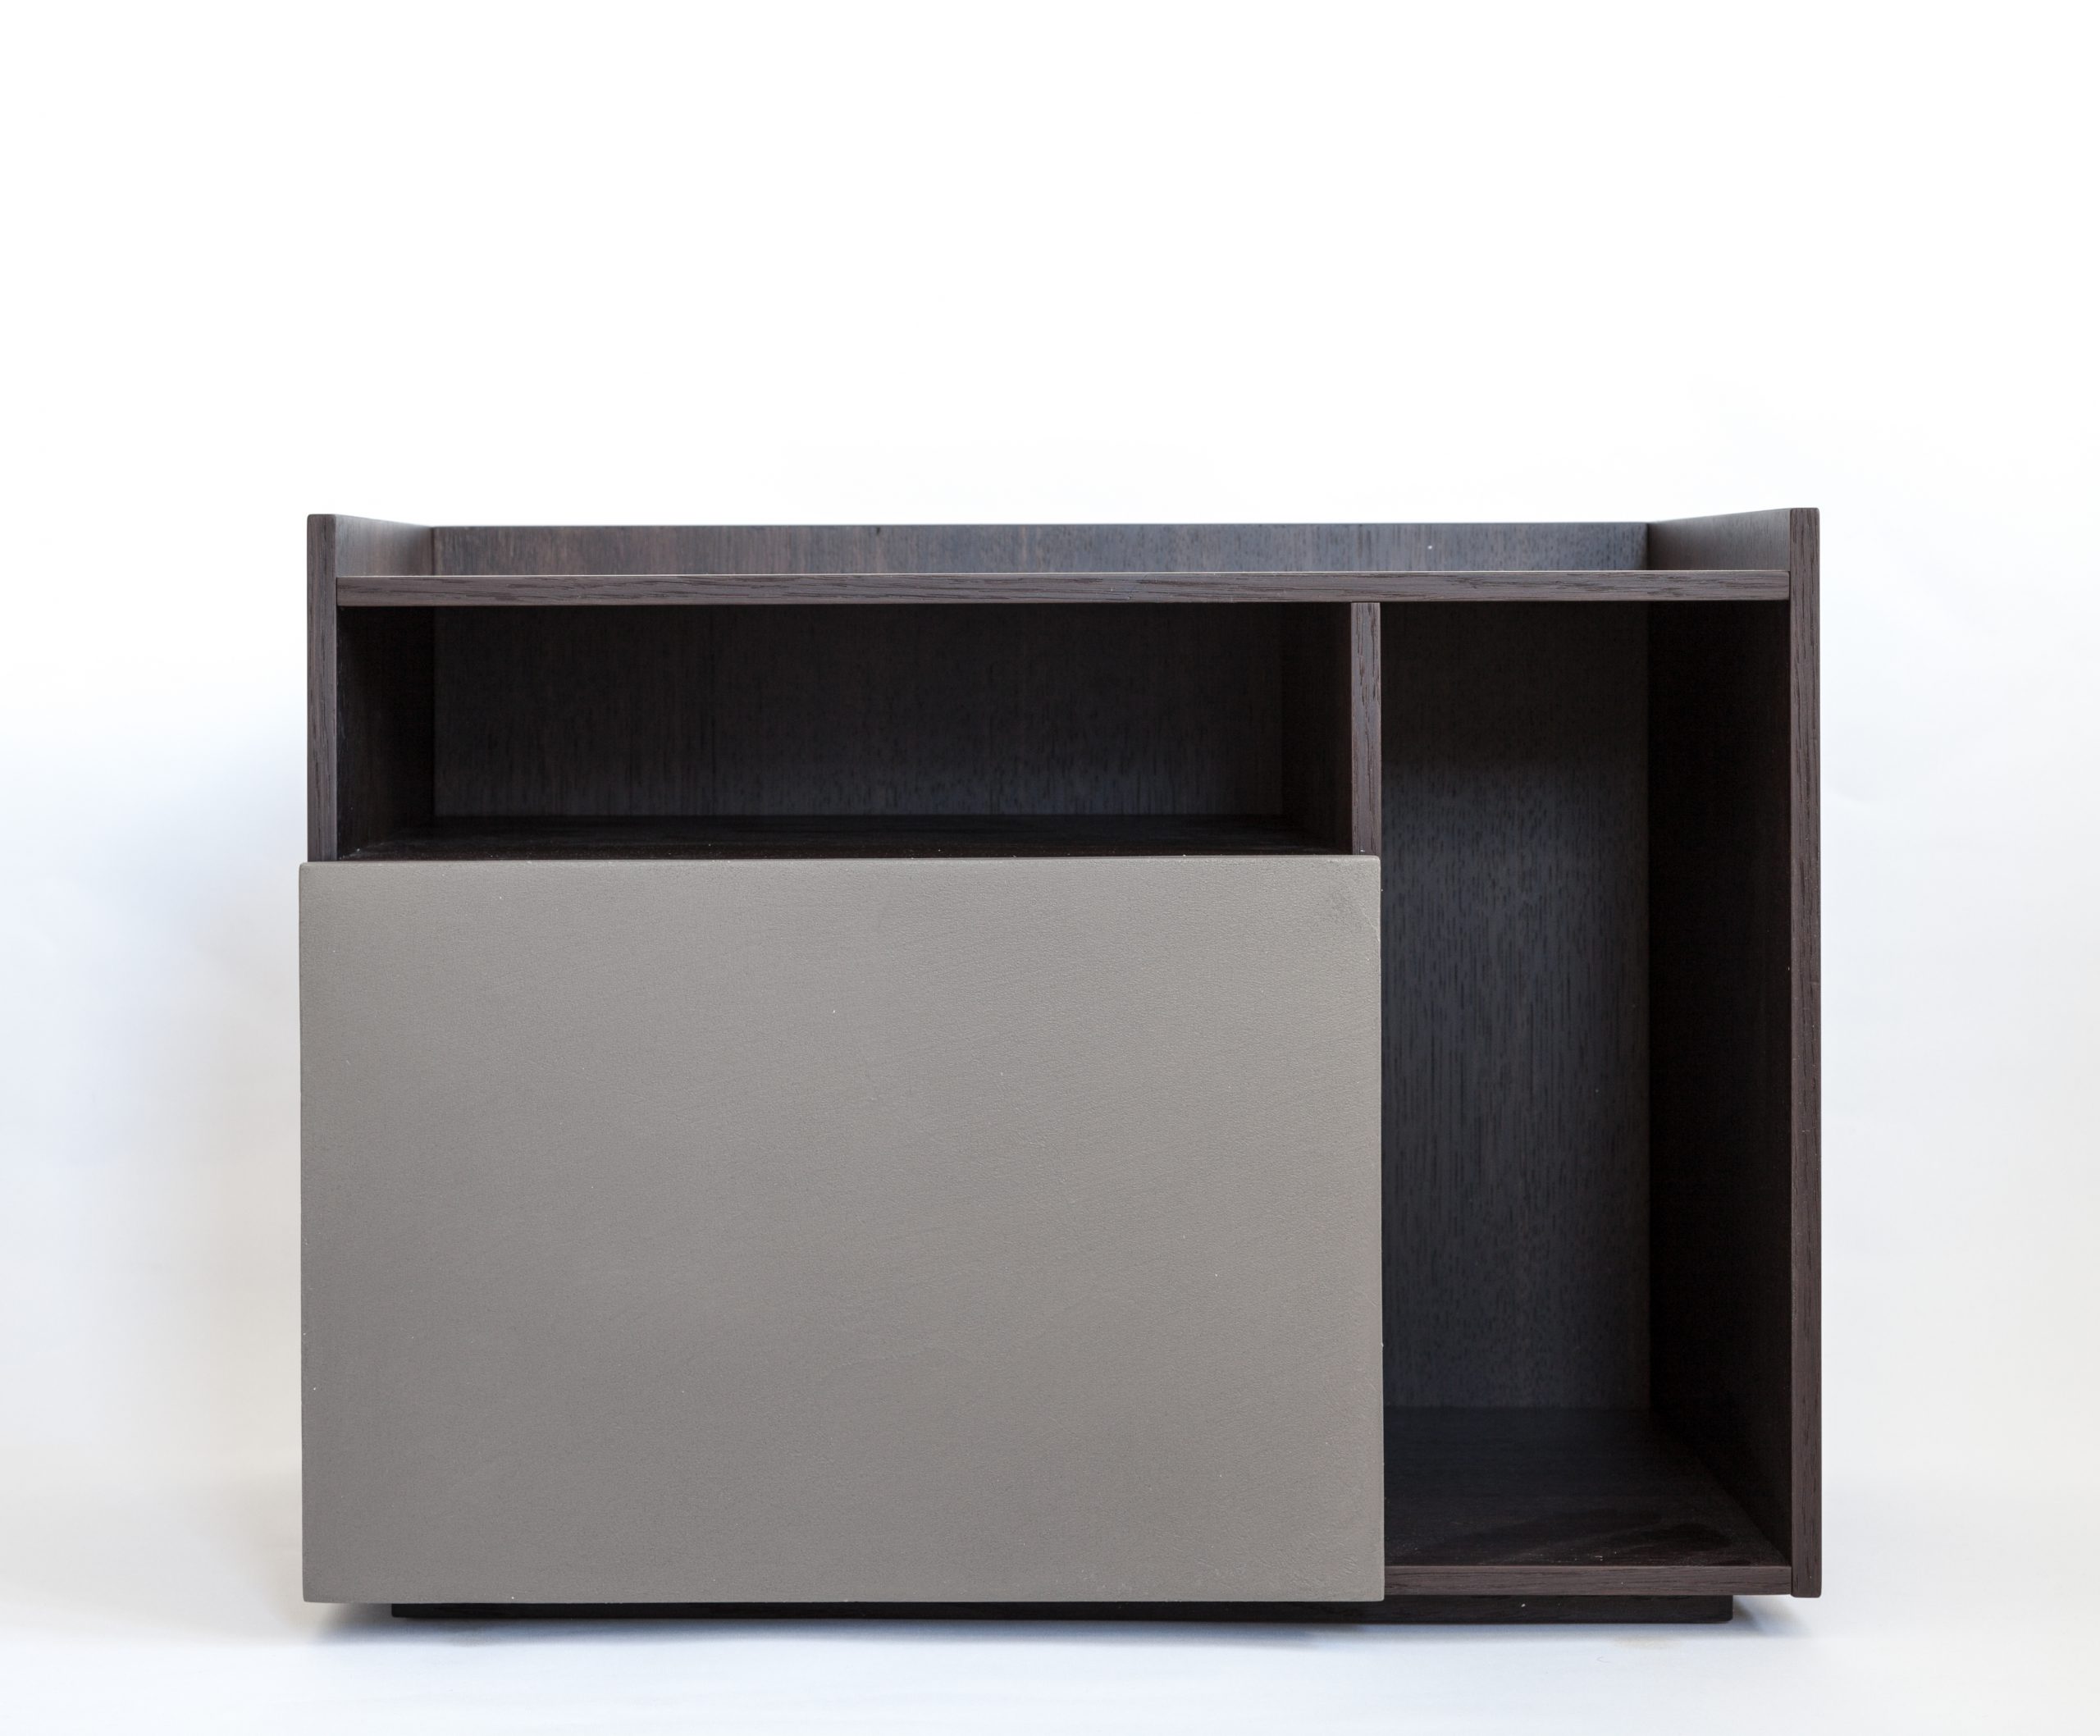 Tip drawer units by Debiasi Sandri for Lema